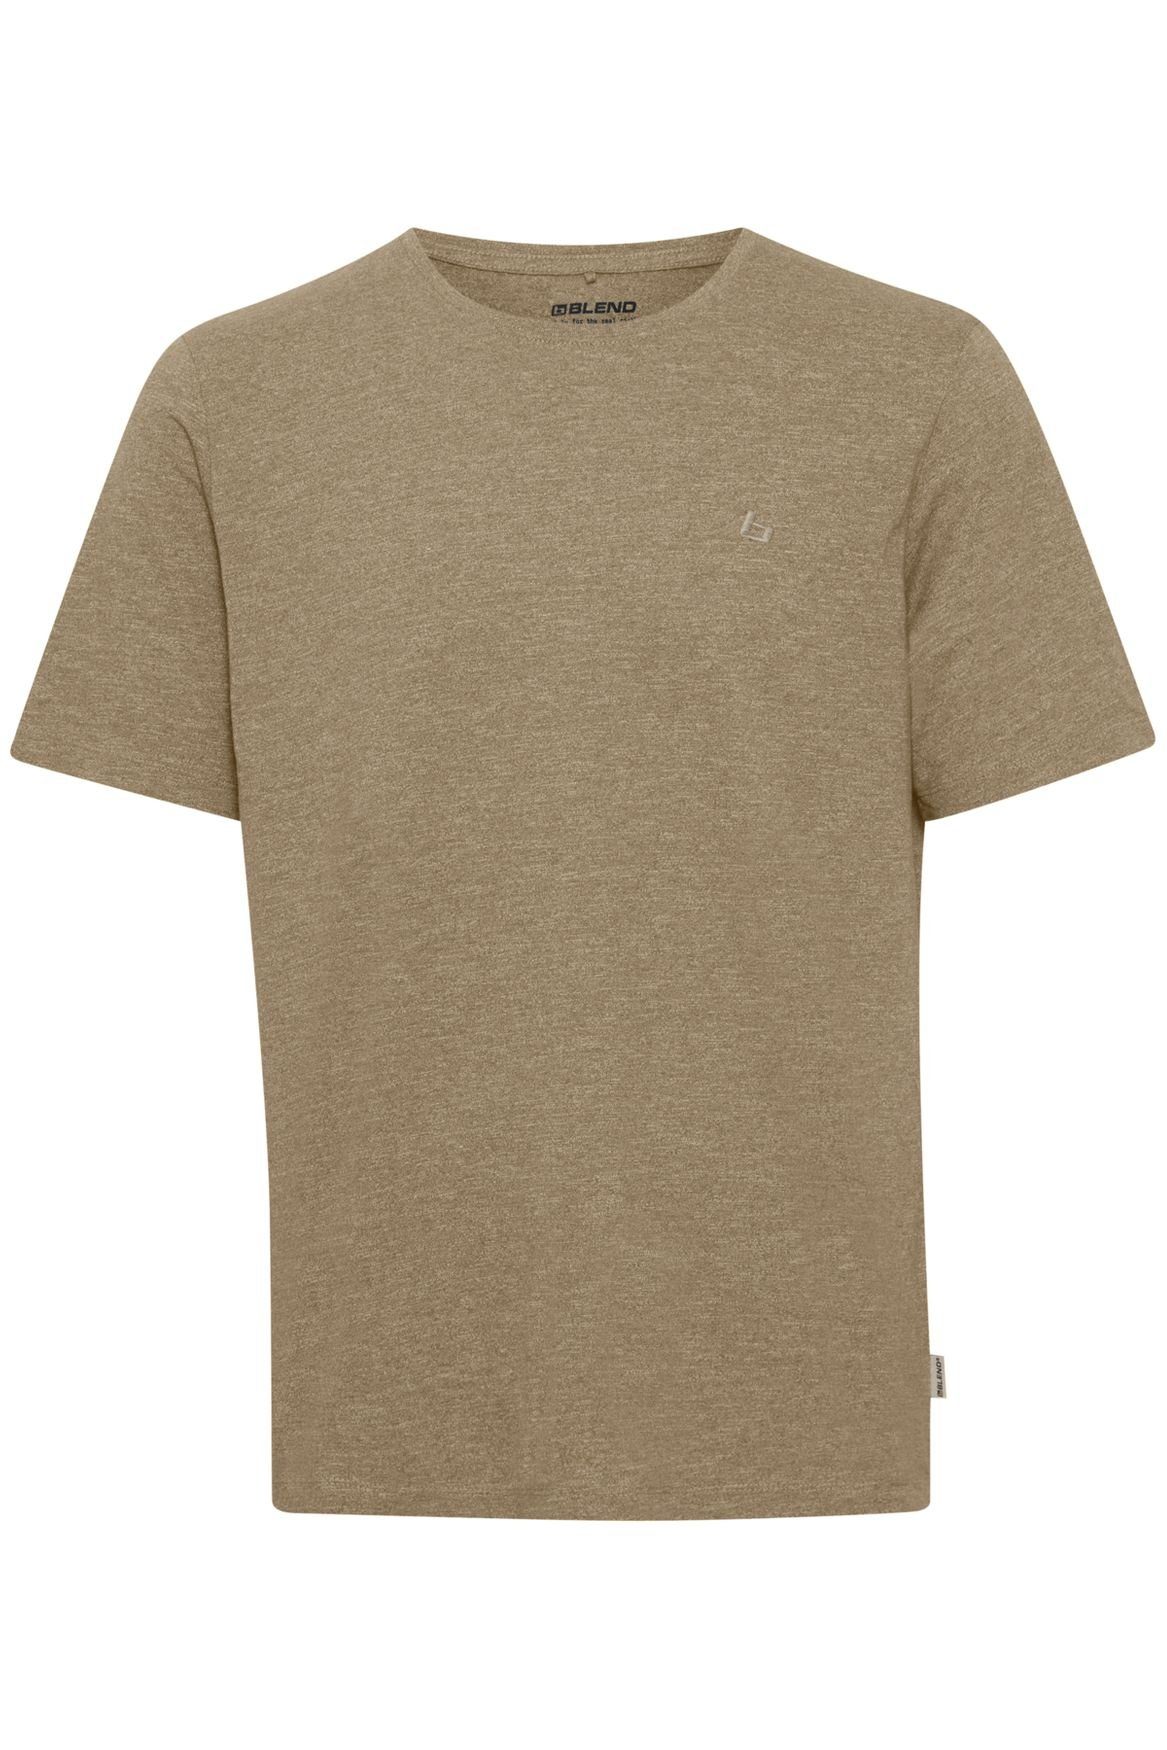 Blend T-Shirt Rundhals Stretch 5030 T-Shirt Shirt in Kurzarm BHWilton Beige